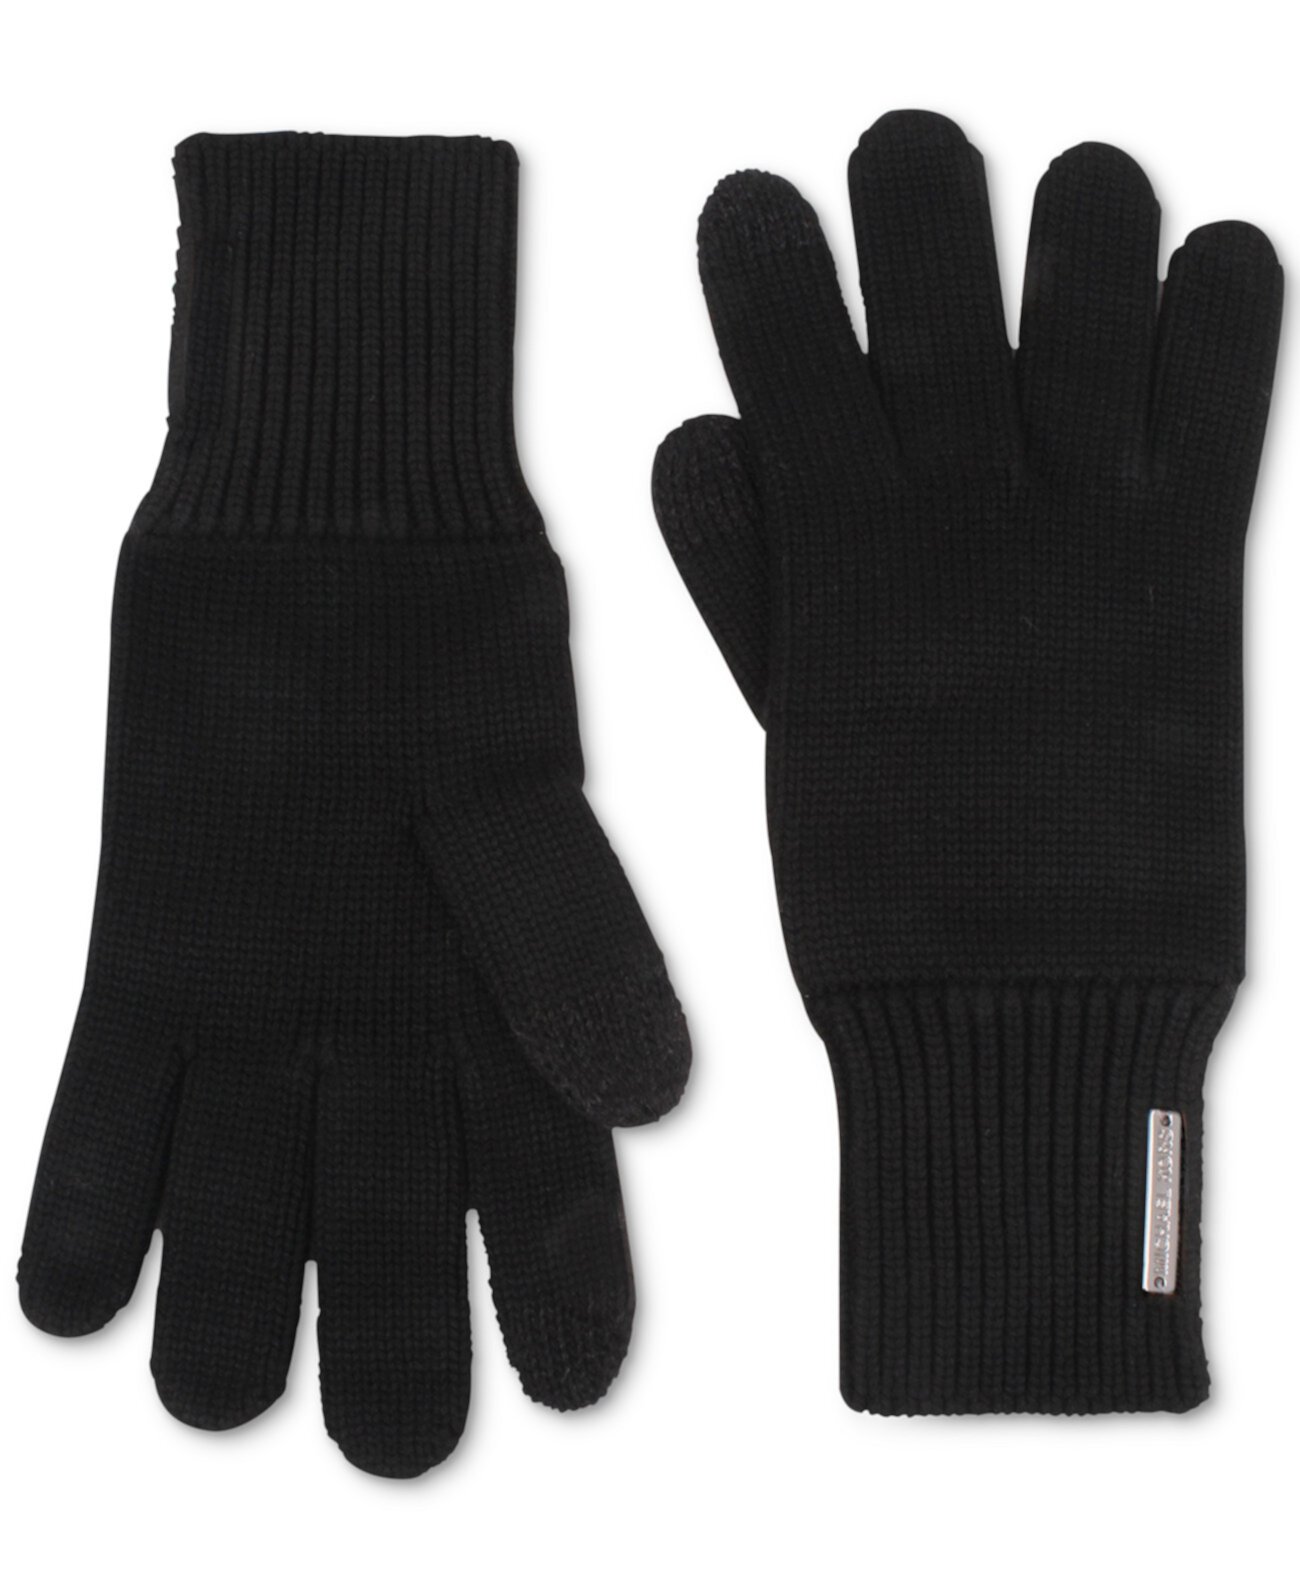 Технические перчатки Luxe Touch Tip Michael Kors